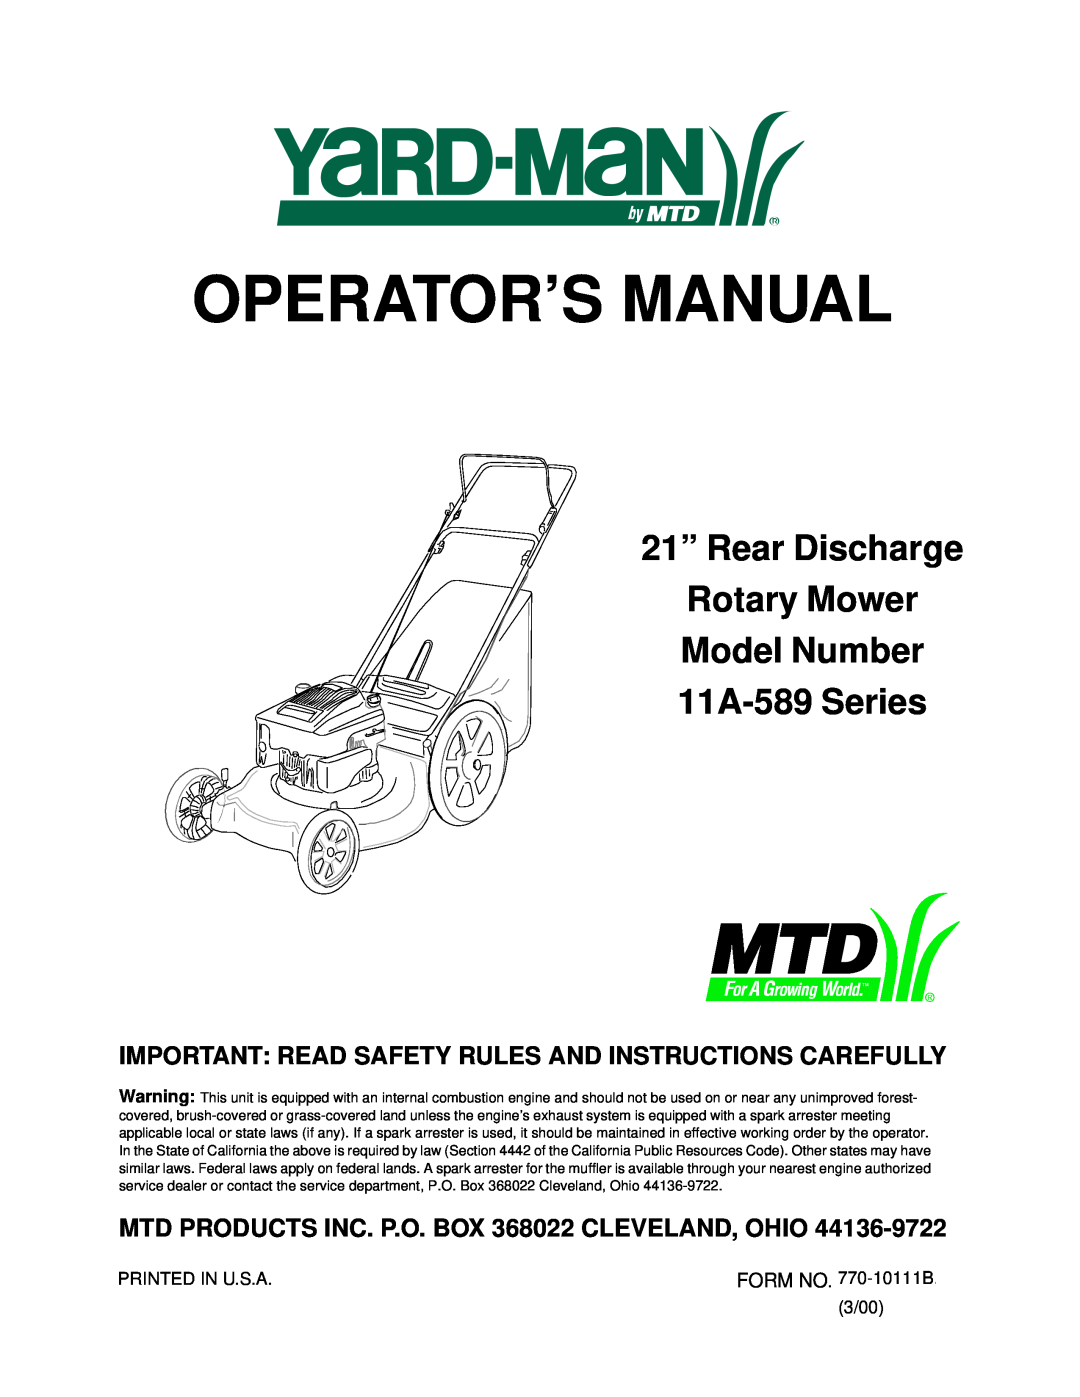 Yard-Man manual Operator’S Manual, 21” Rear Discharge Rotary Mower Model Number 11A-589 Series 